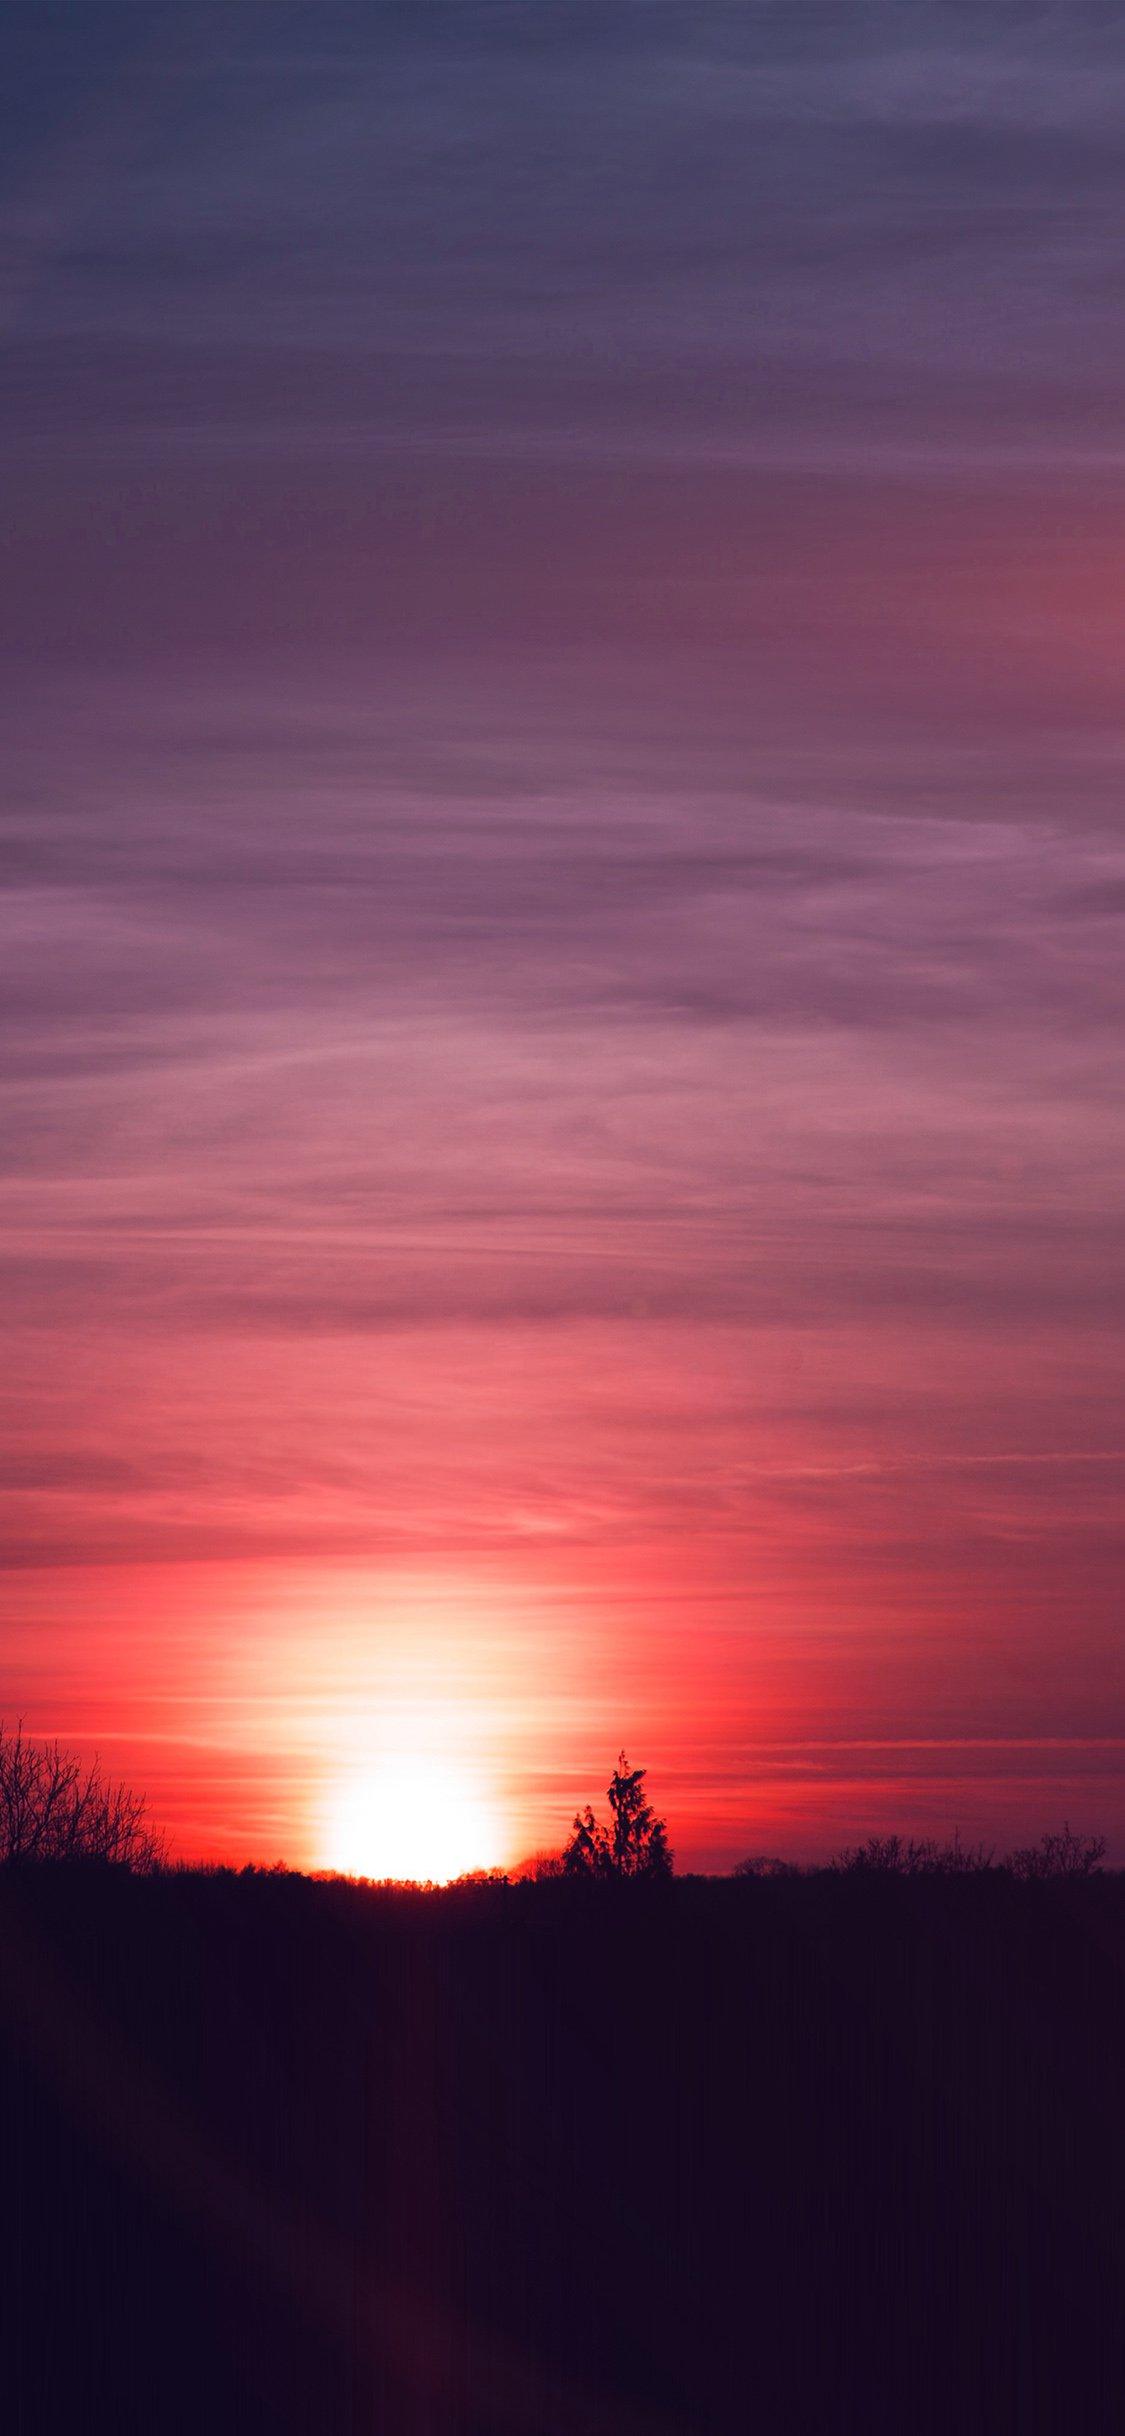 Sky sunset night summer cloud iPhone X Wallpaper Download. iPhone